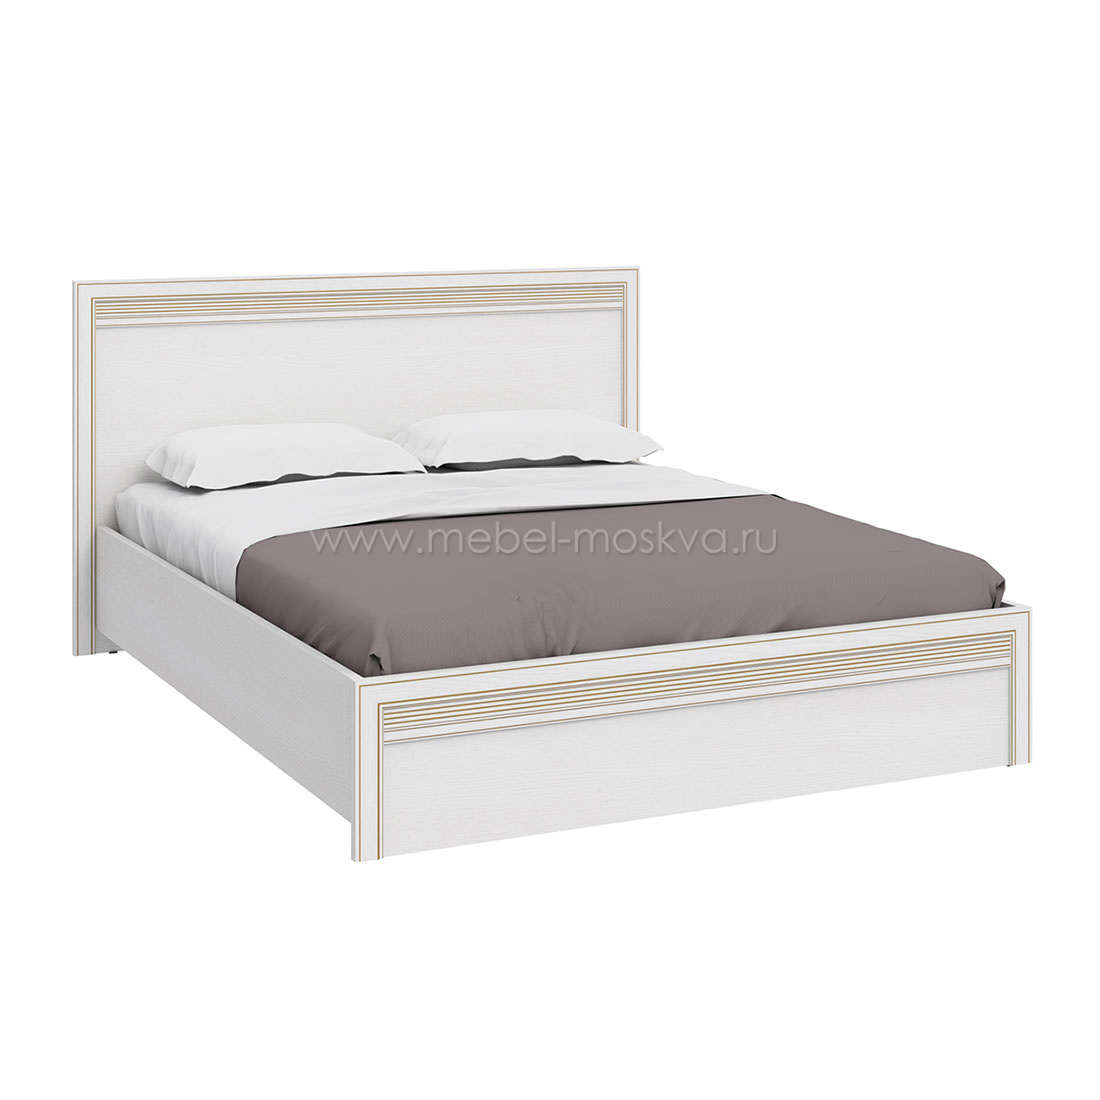 Двуспальная кровать Верди 160х200 (Белуна)